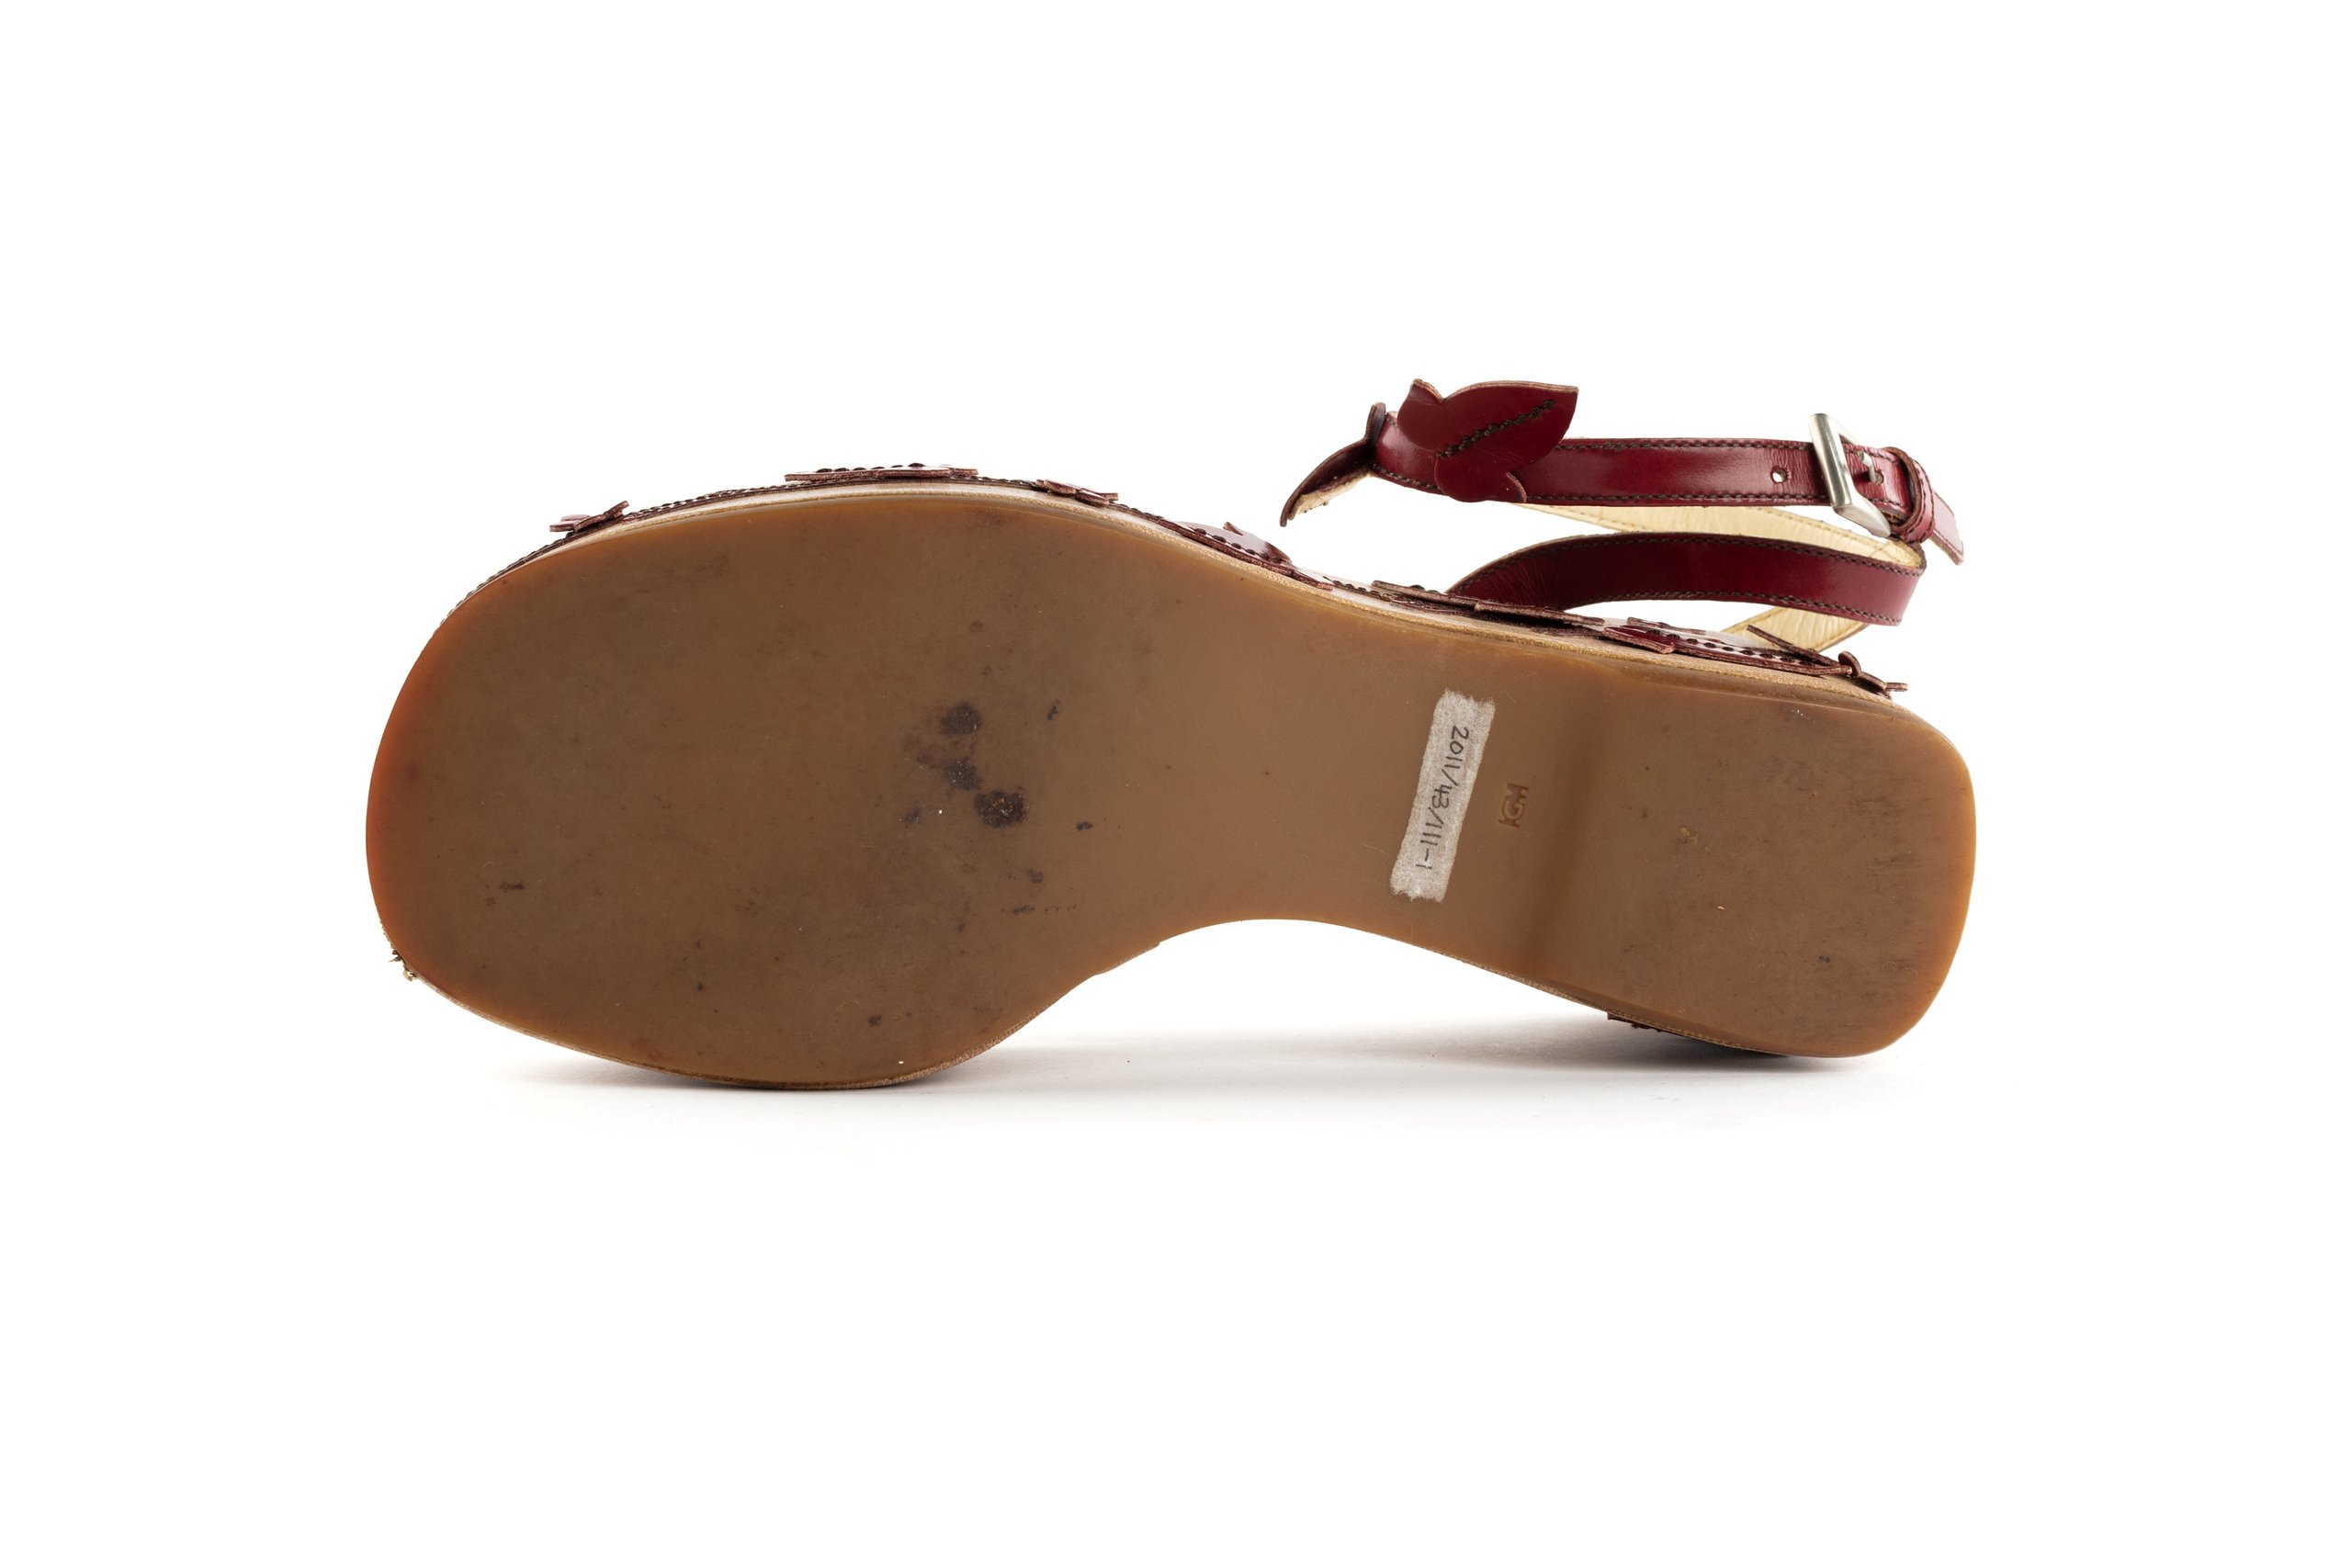 Pair of sandals by Prada worn by Catherine Martin